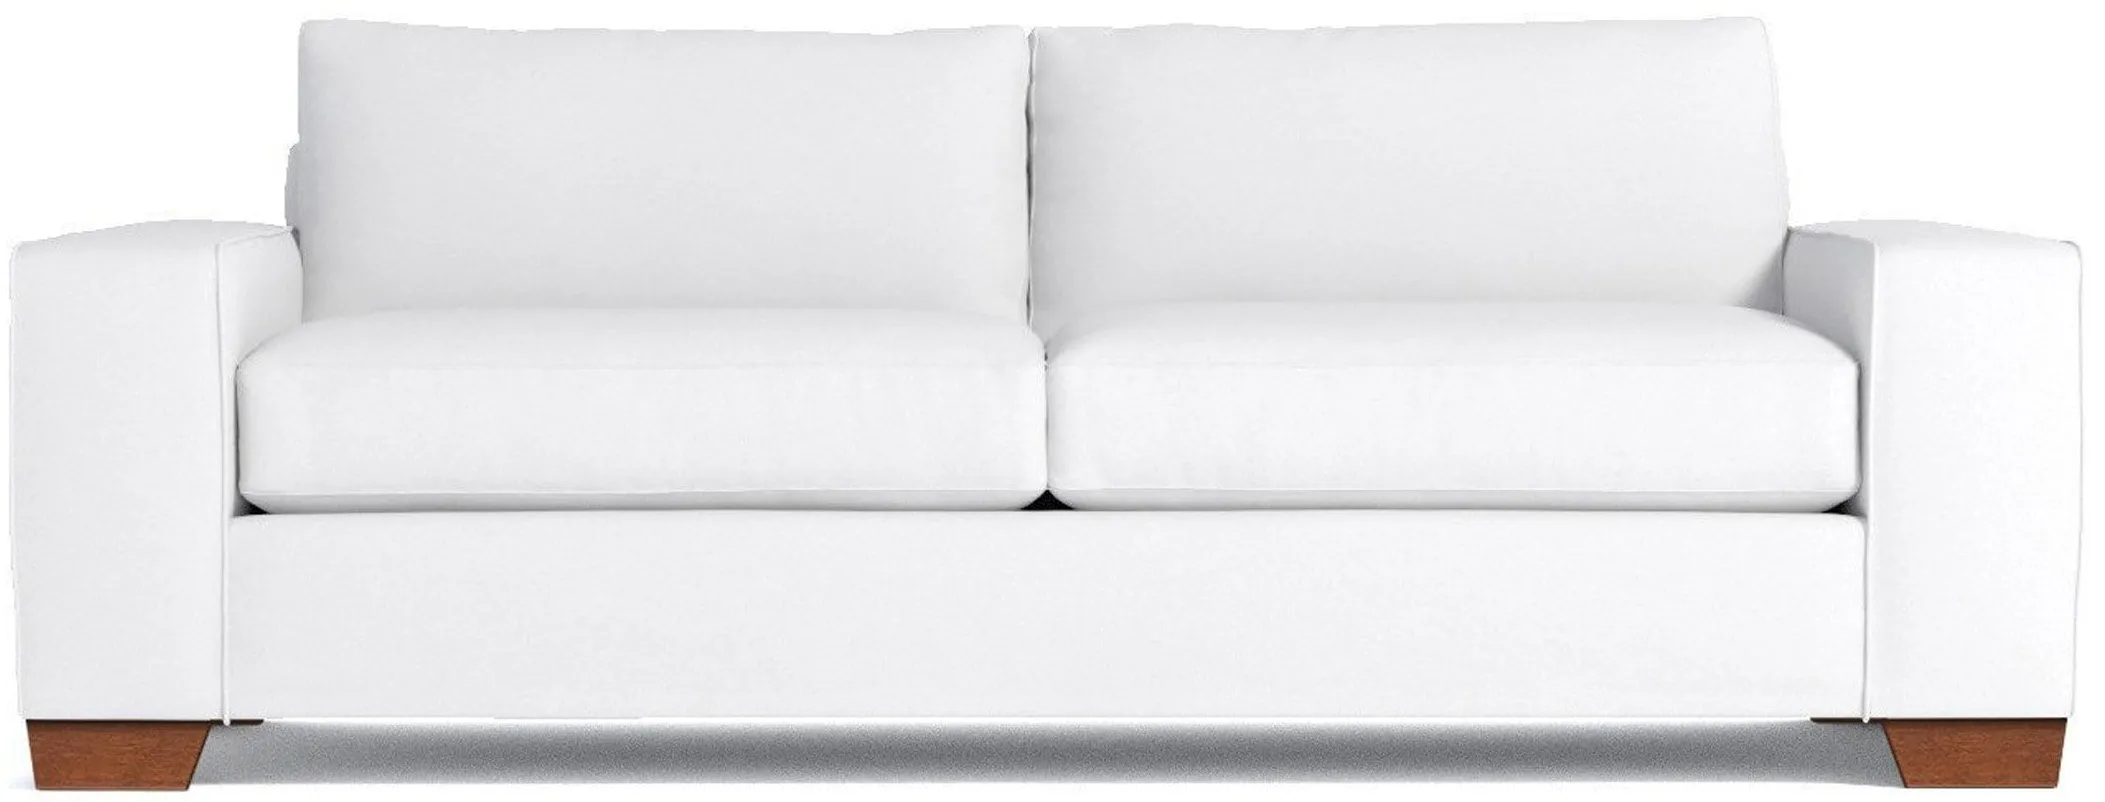 Melrose Queen Size Sleeper Sofa Bed